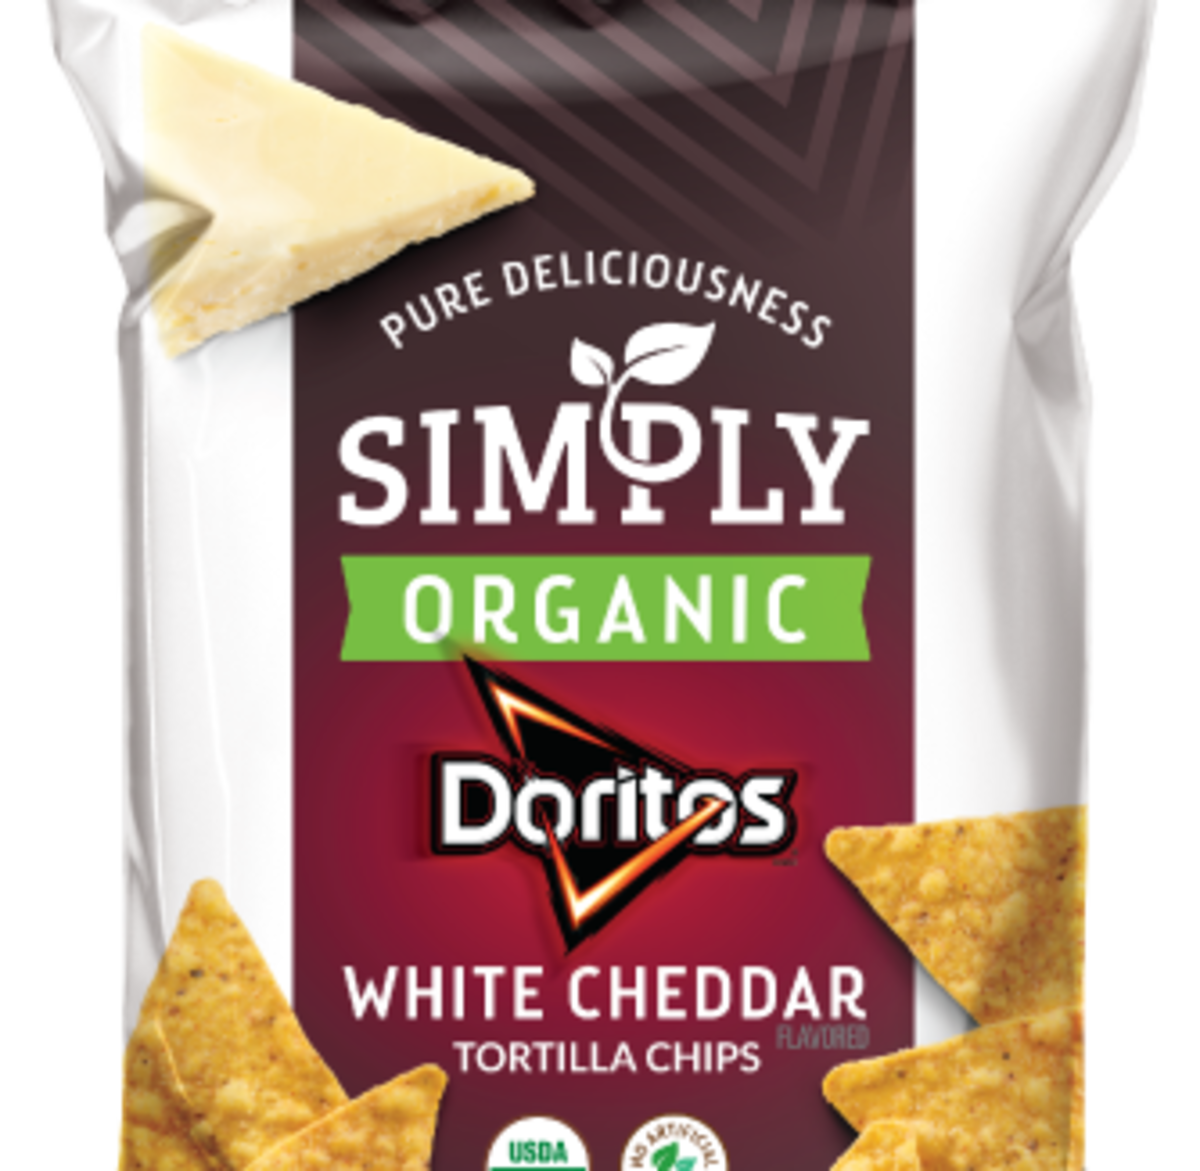 simply-organic-doritos-white-cheddar